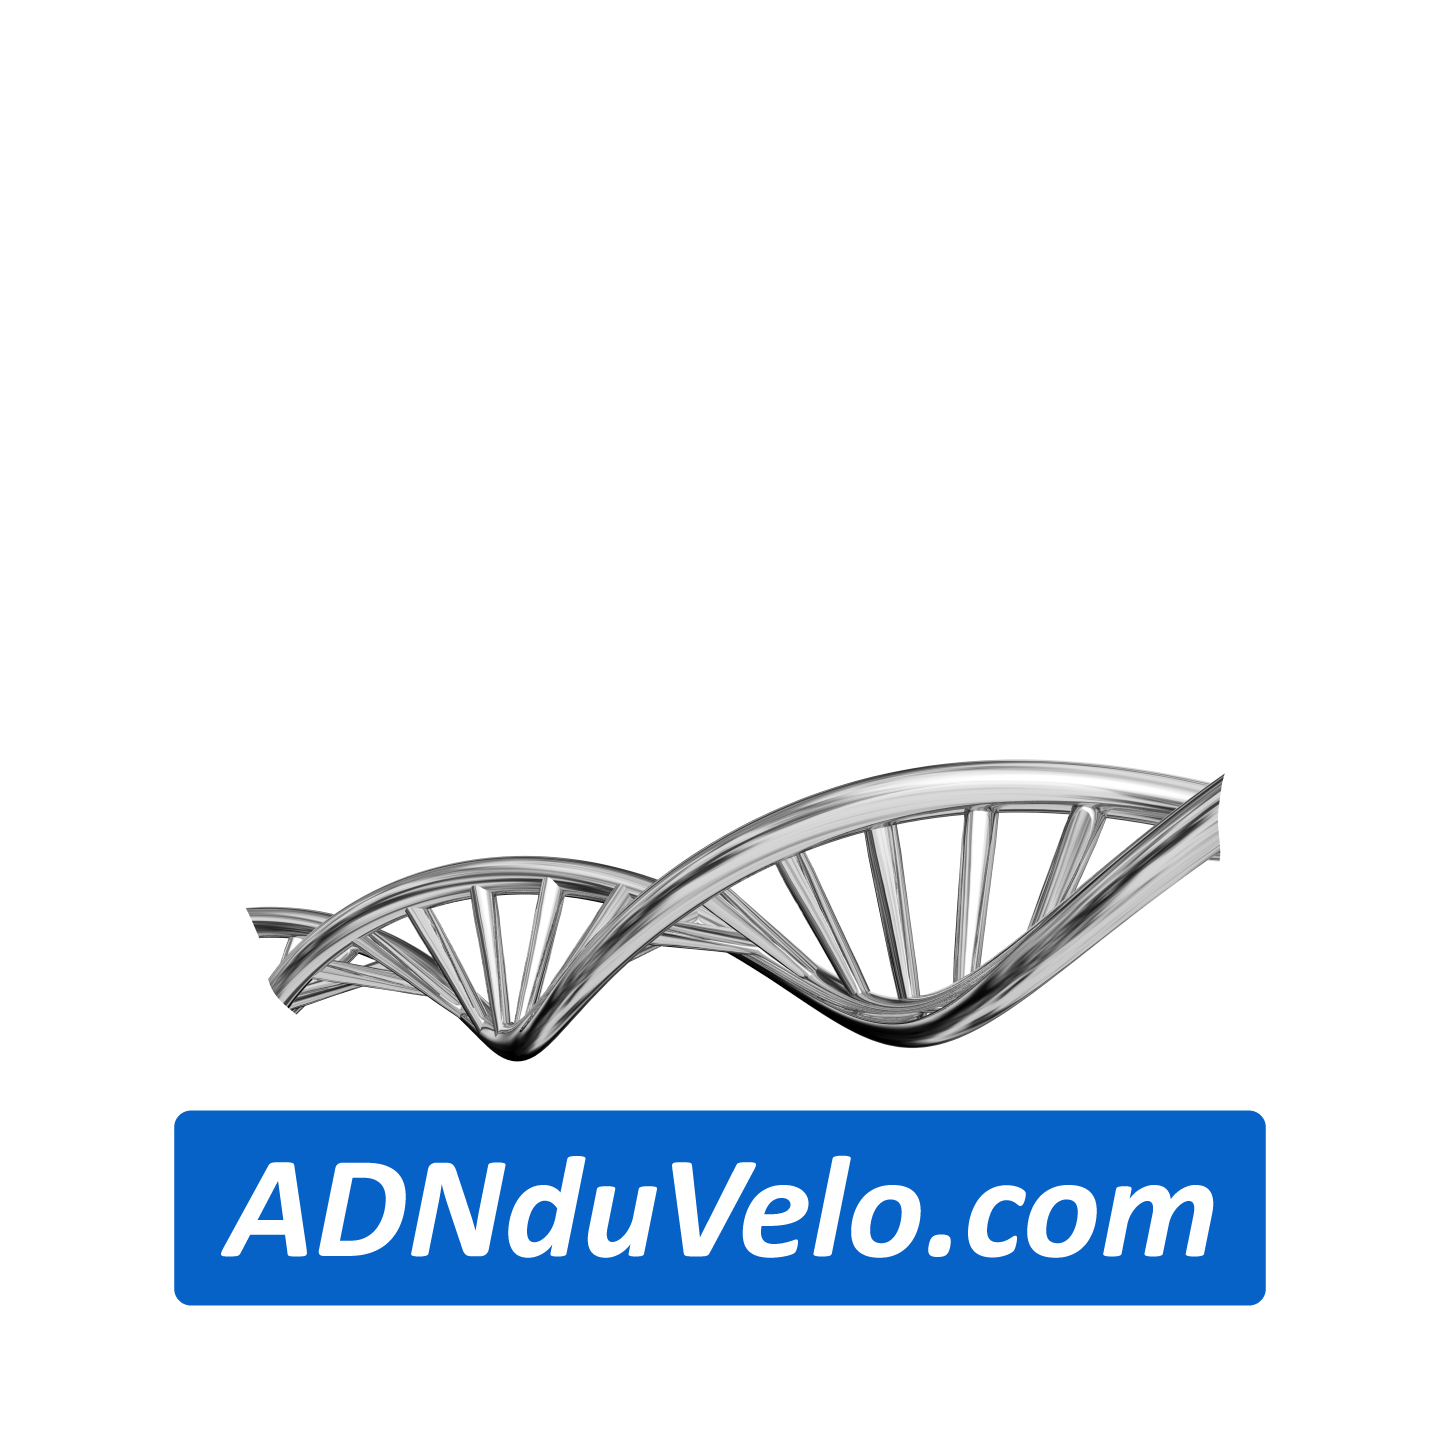 ADN du Vélo